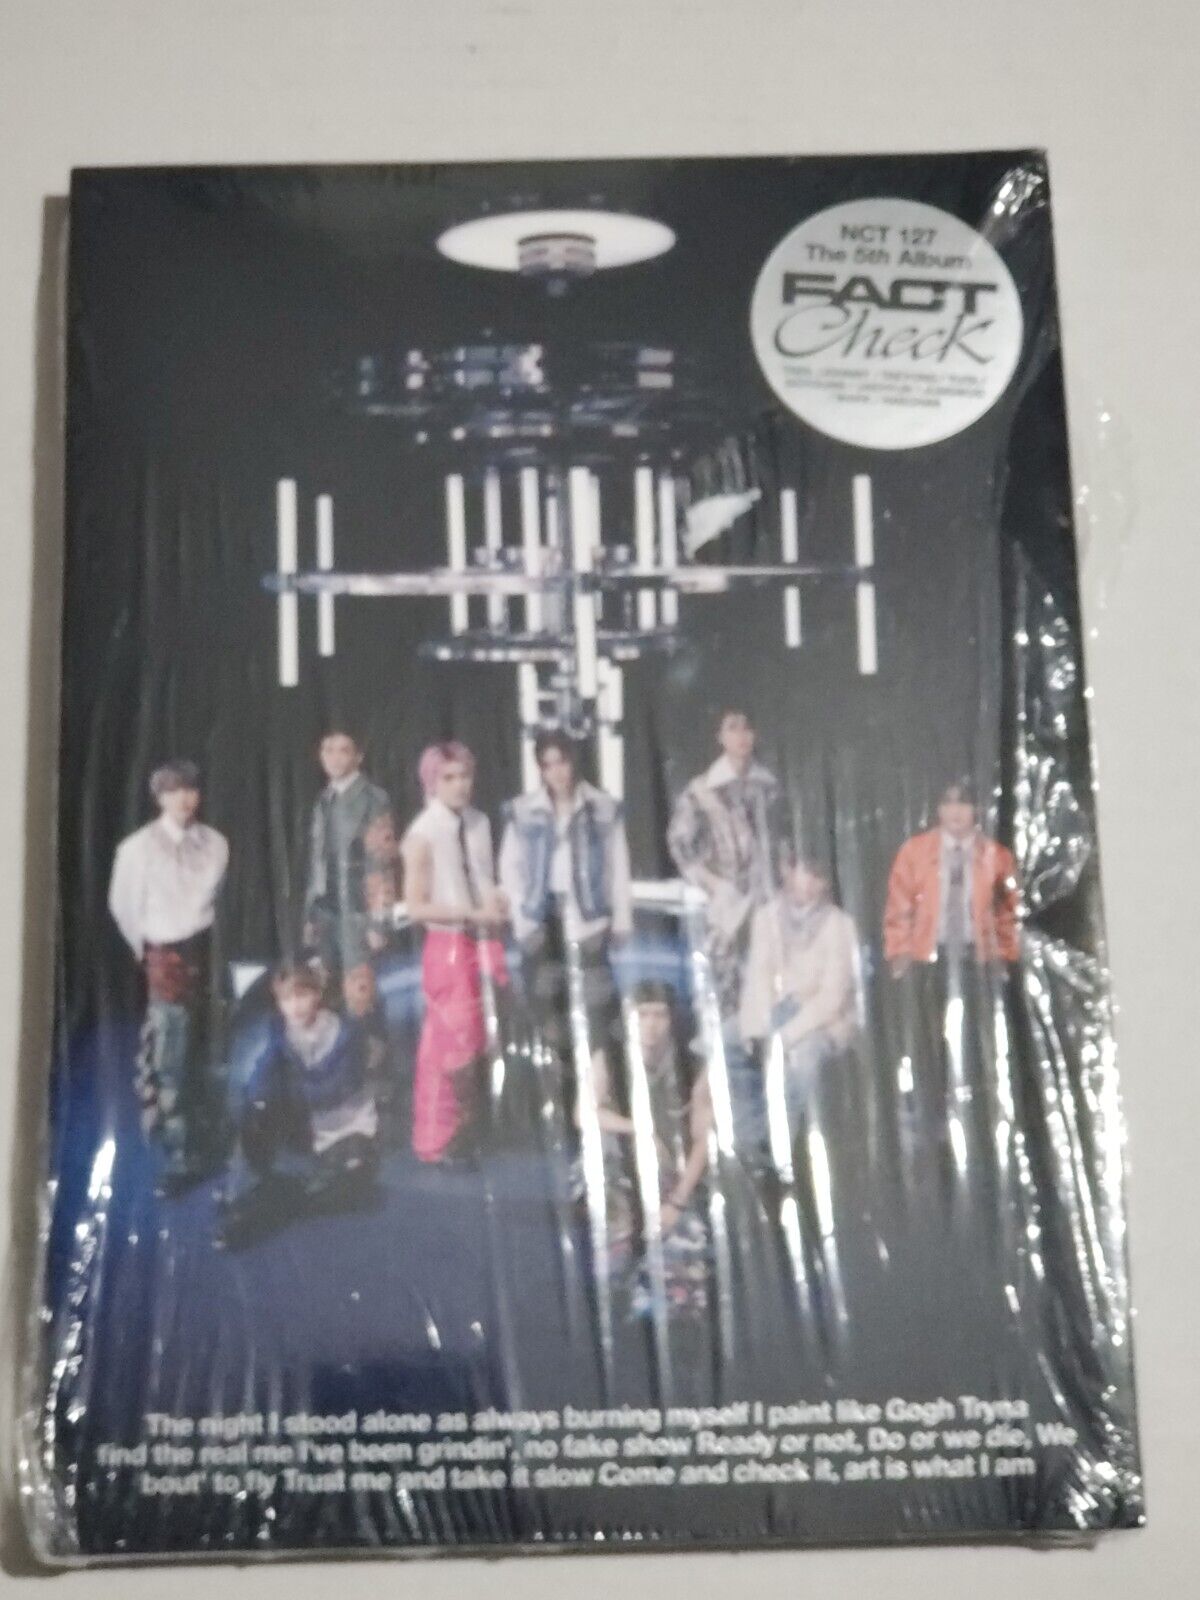 NCT 127 5TH ALBUM 'FACT CHECK' [CHANDELIER VER.] [PHOTOBOOK] CD K Pop OPEN BOX